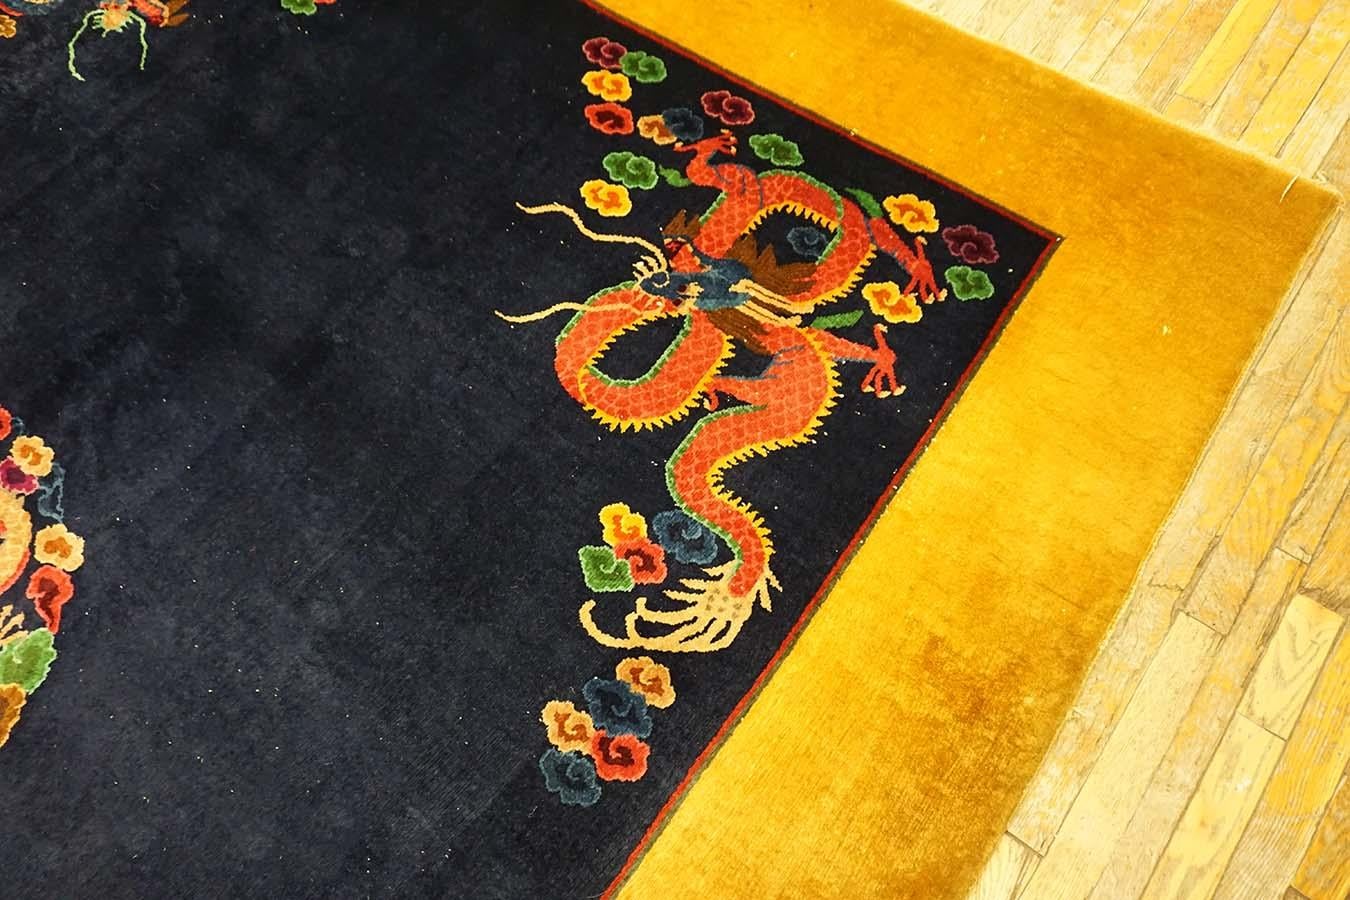 1920s Chinese Art Deco Carpet by Nichols Workshop (8'10'' x 11'6'' - 270 x 350) For Sale 1